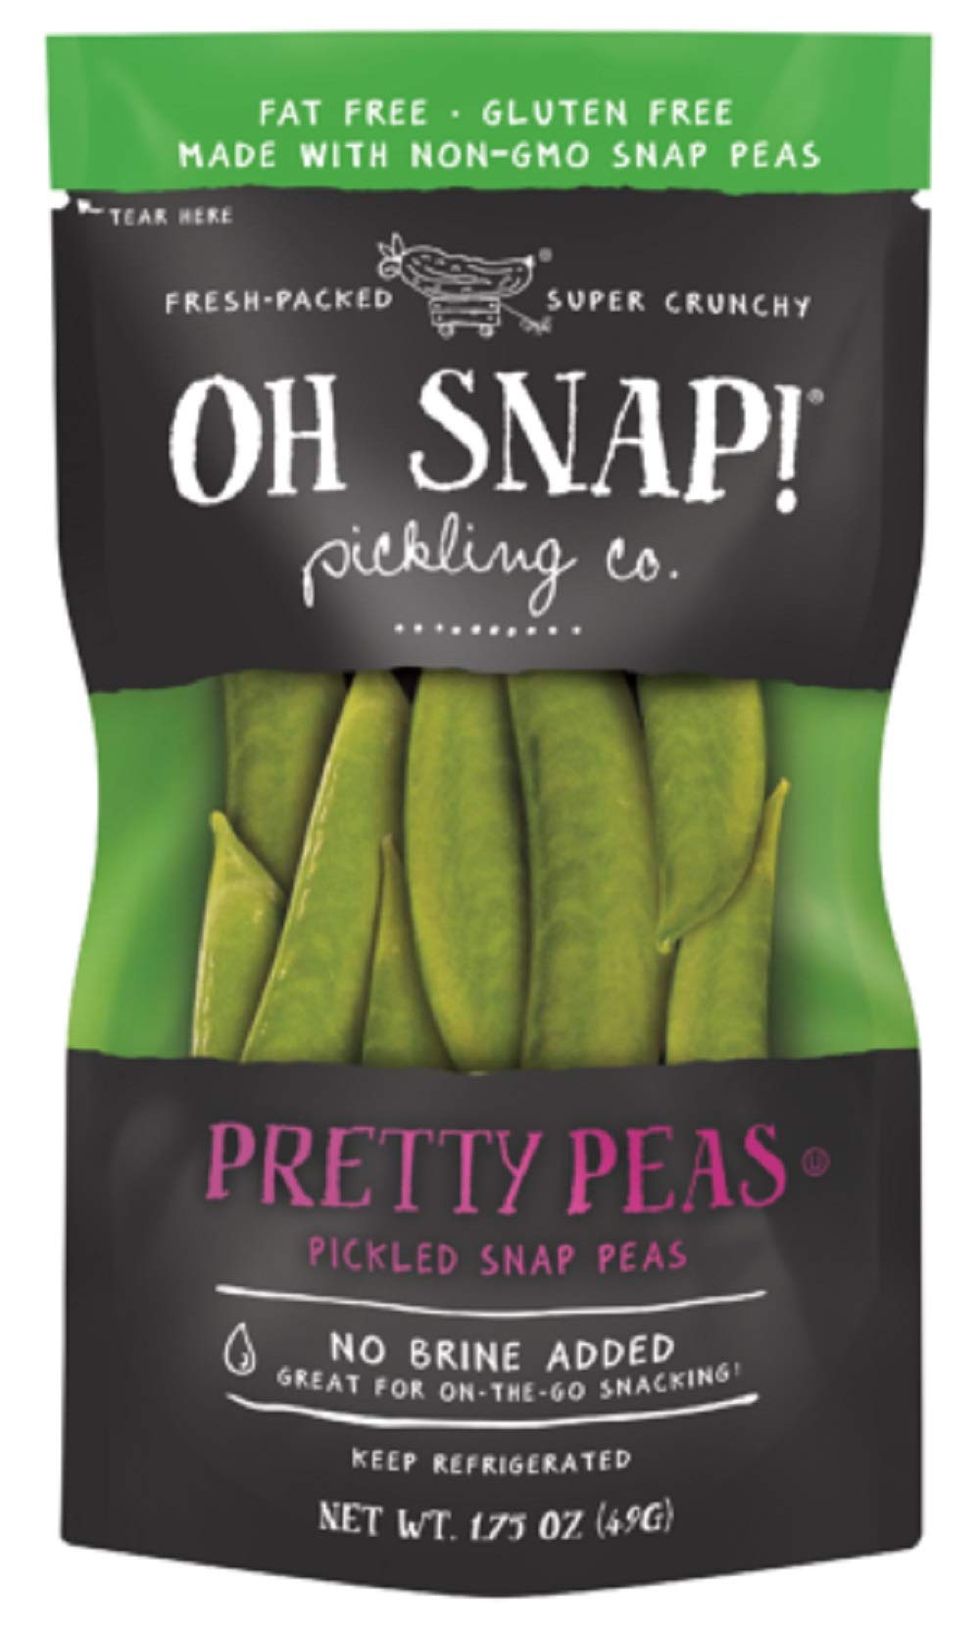 Pretty Peas